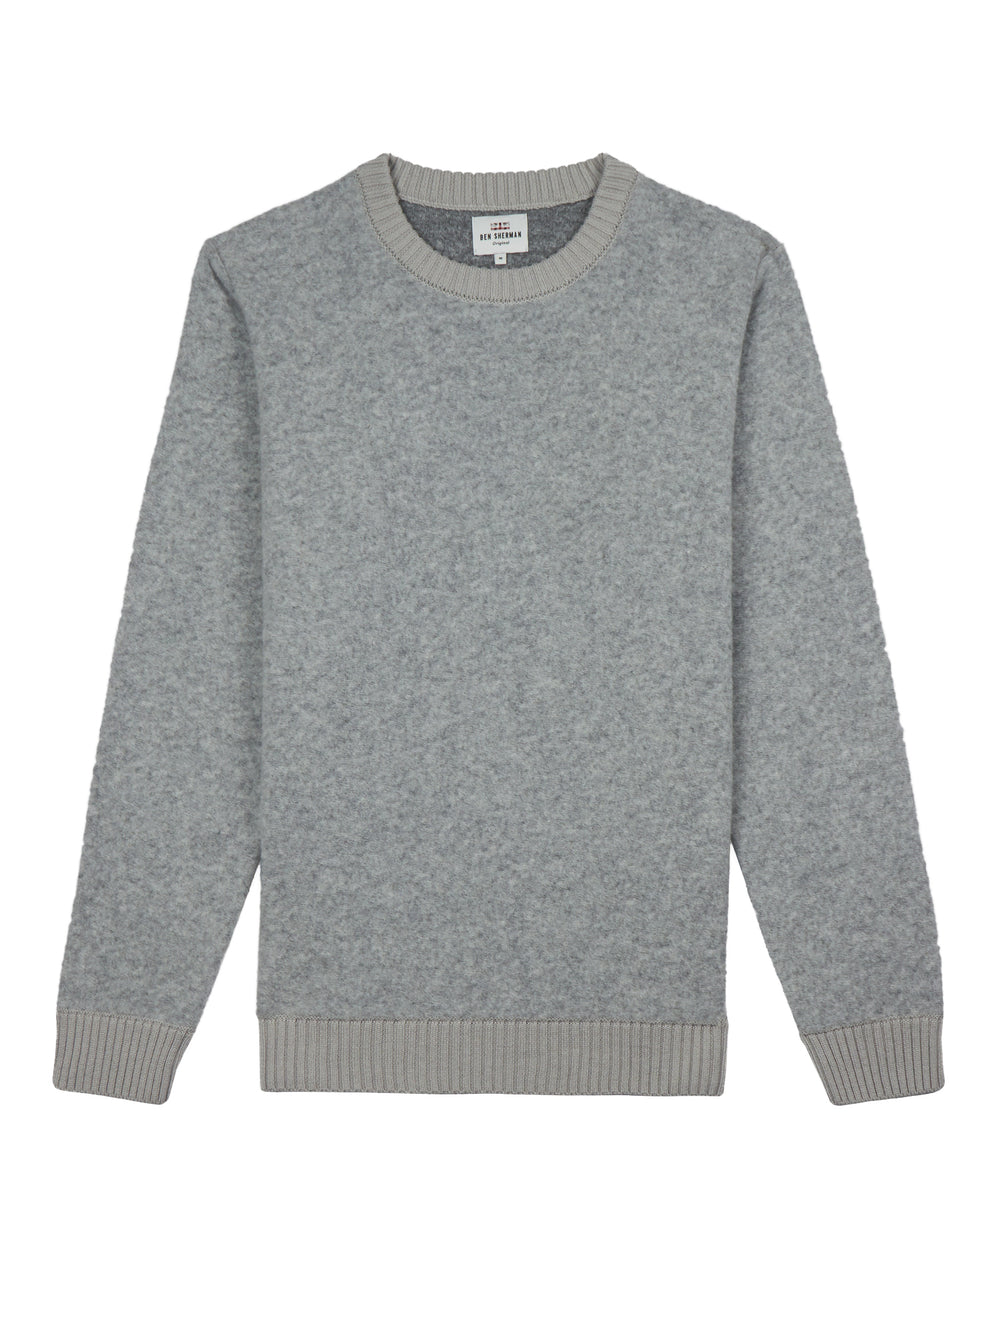 Boucle Knit Crewneck Sweater - Grey